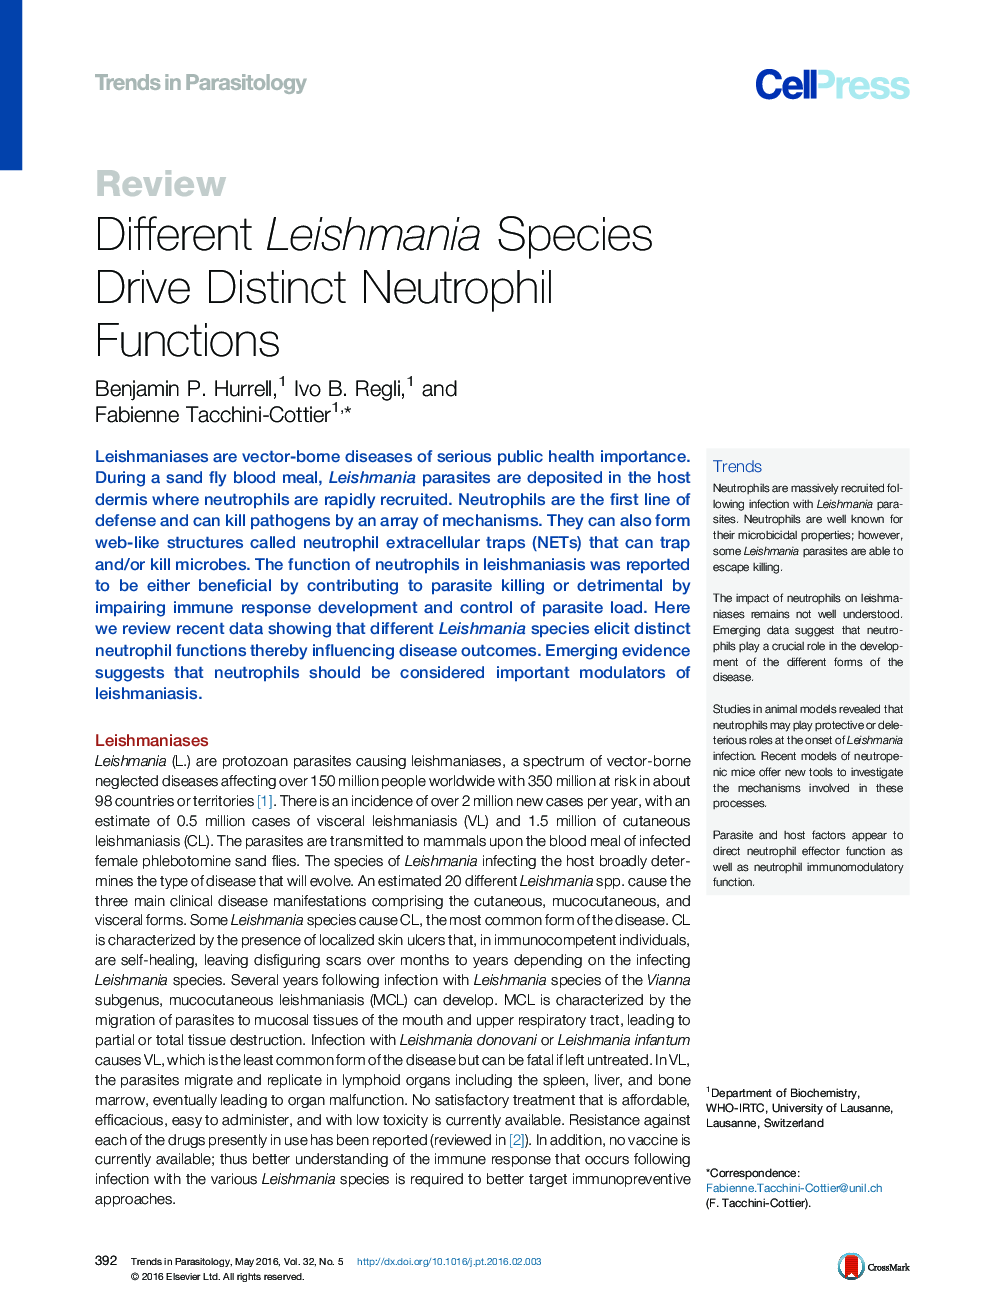 Different Leishmania Species Drive Distinct Neutrophil Functions